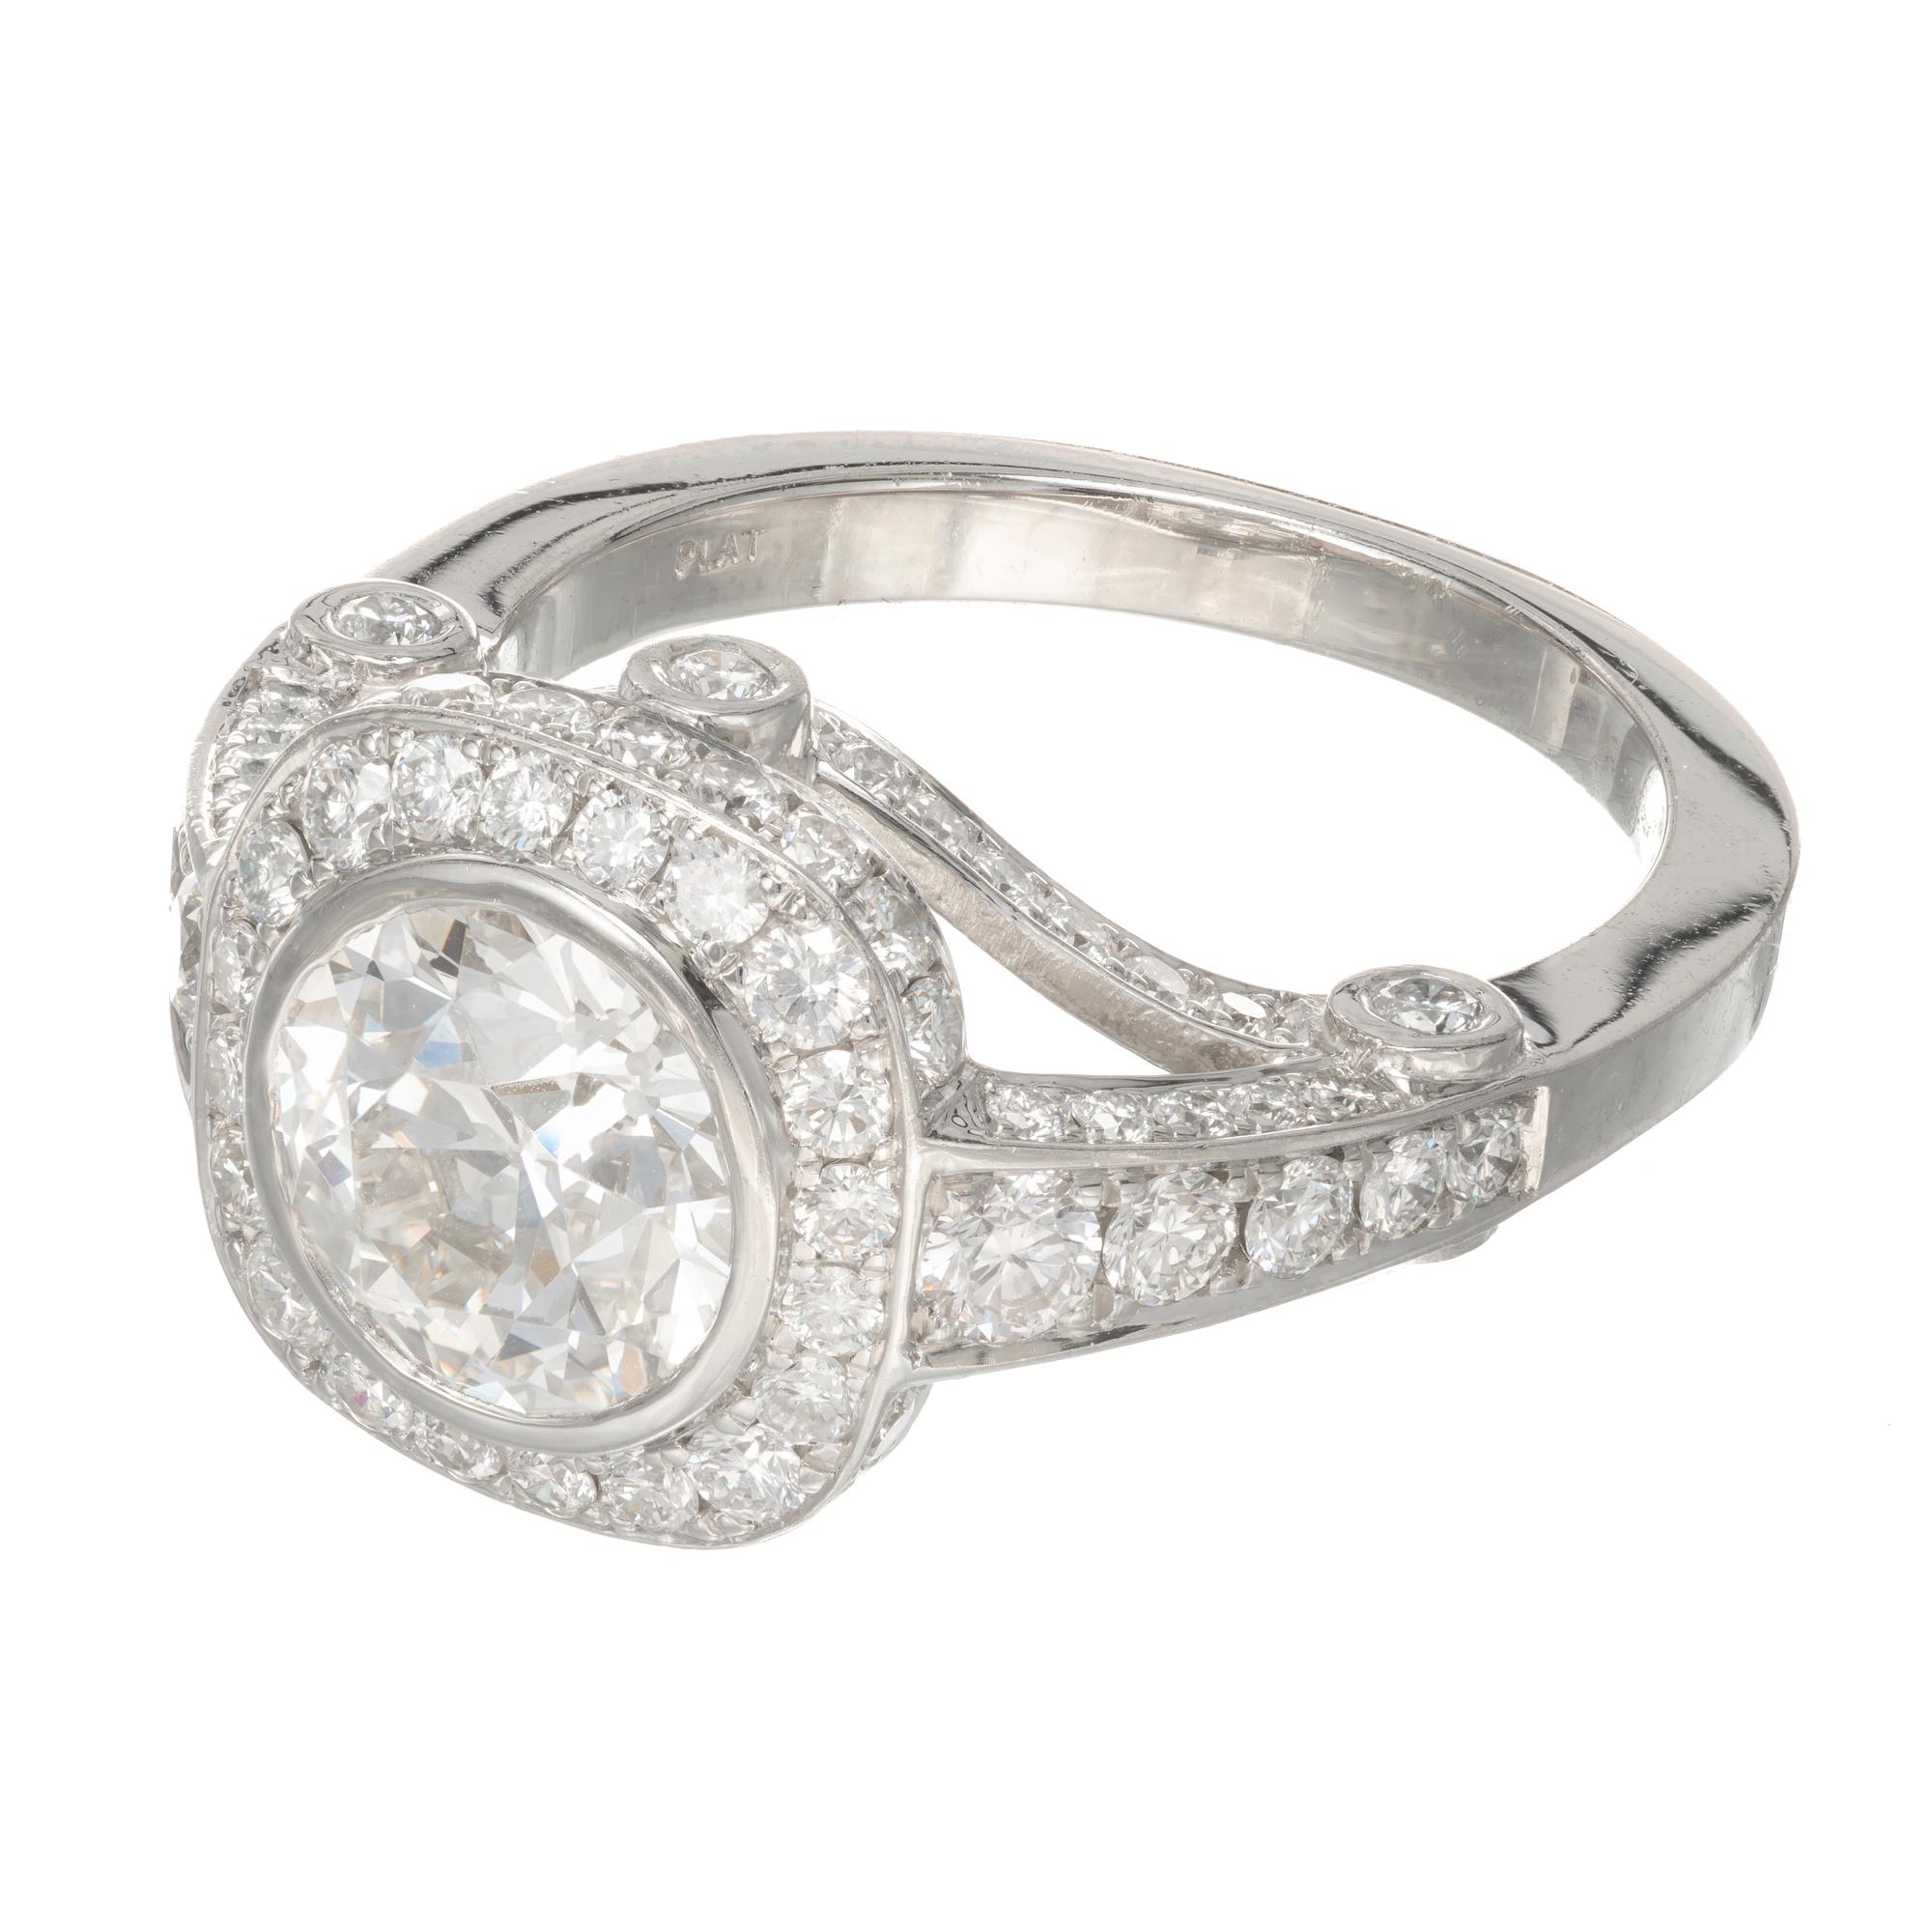 1.98 carat diamond ring